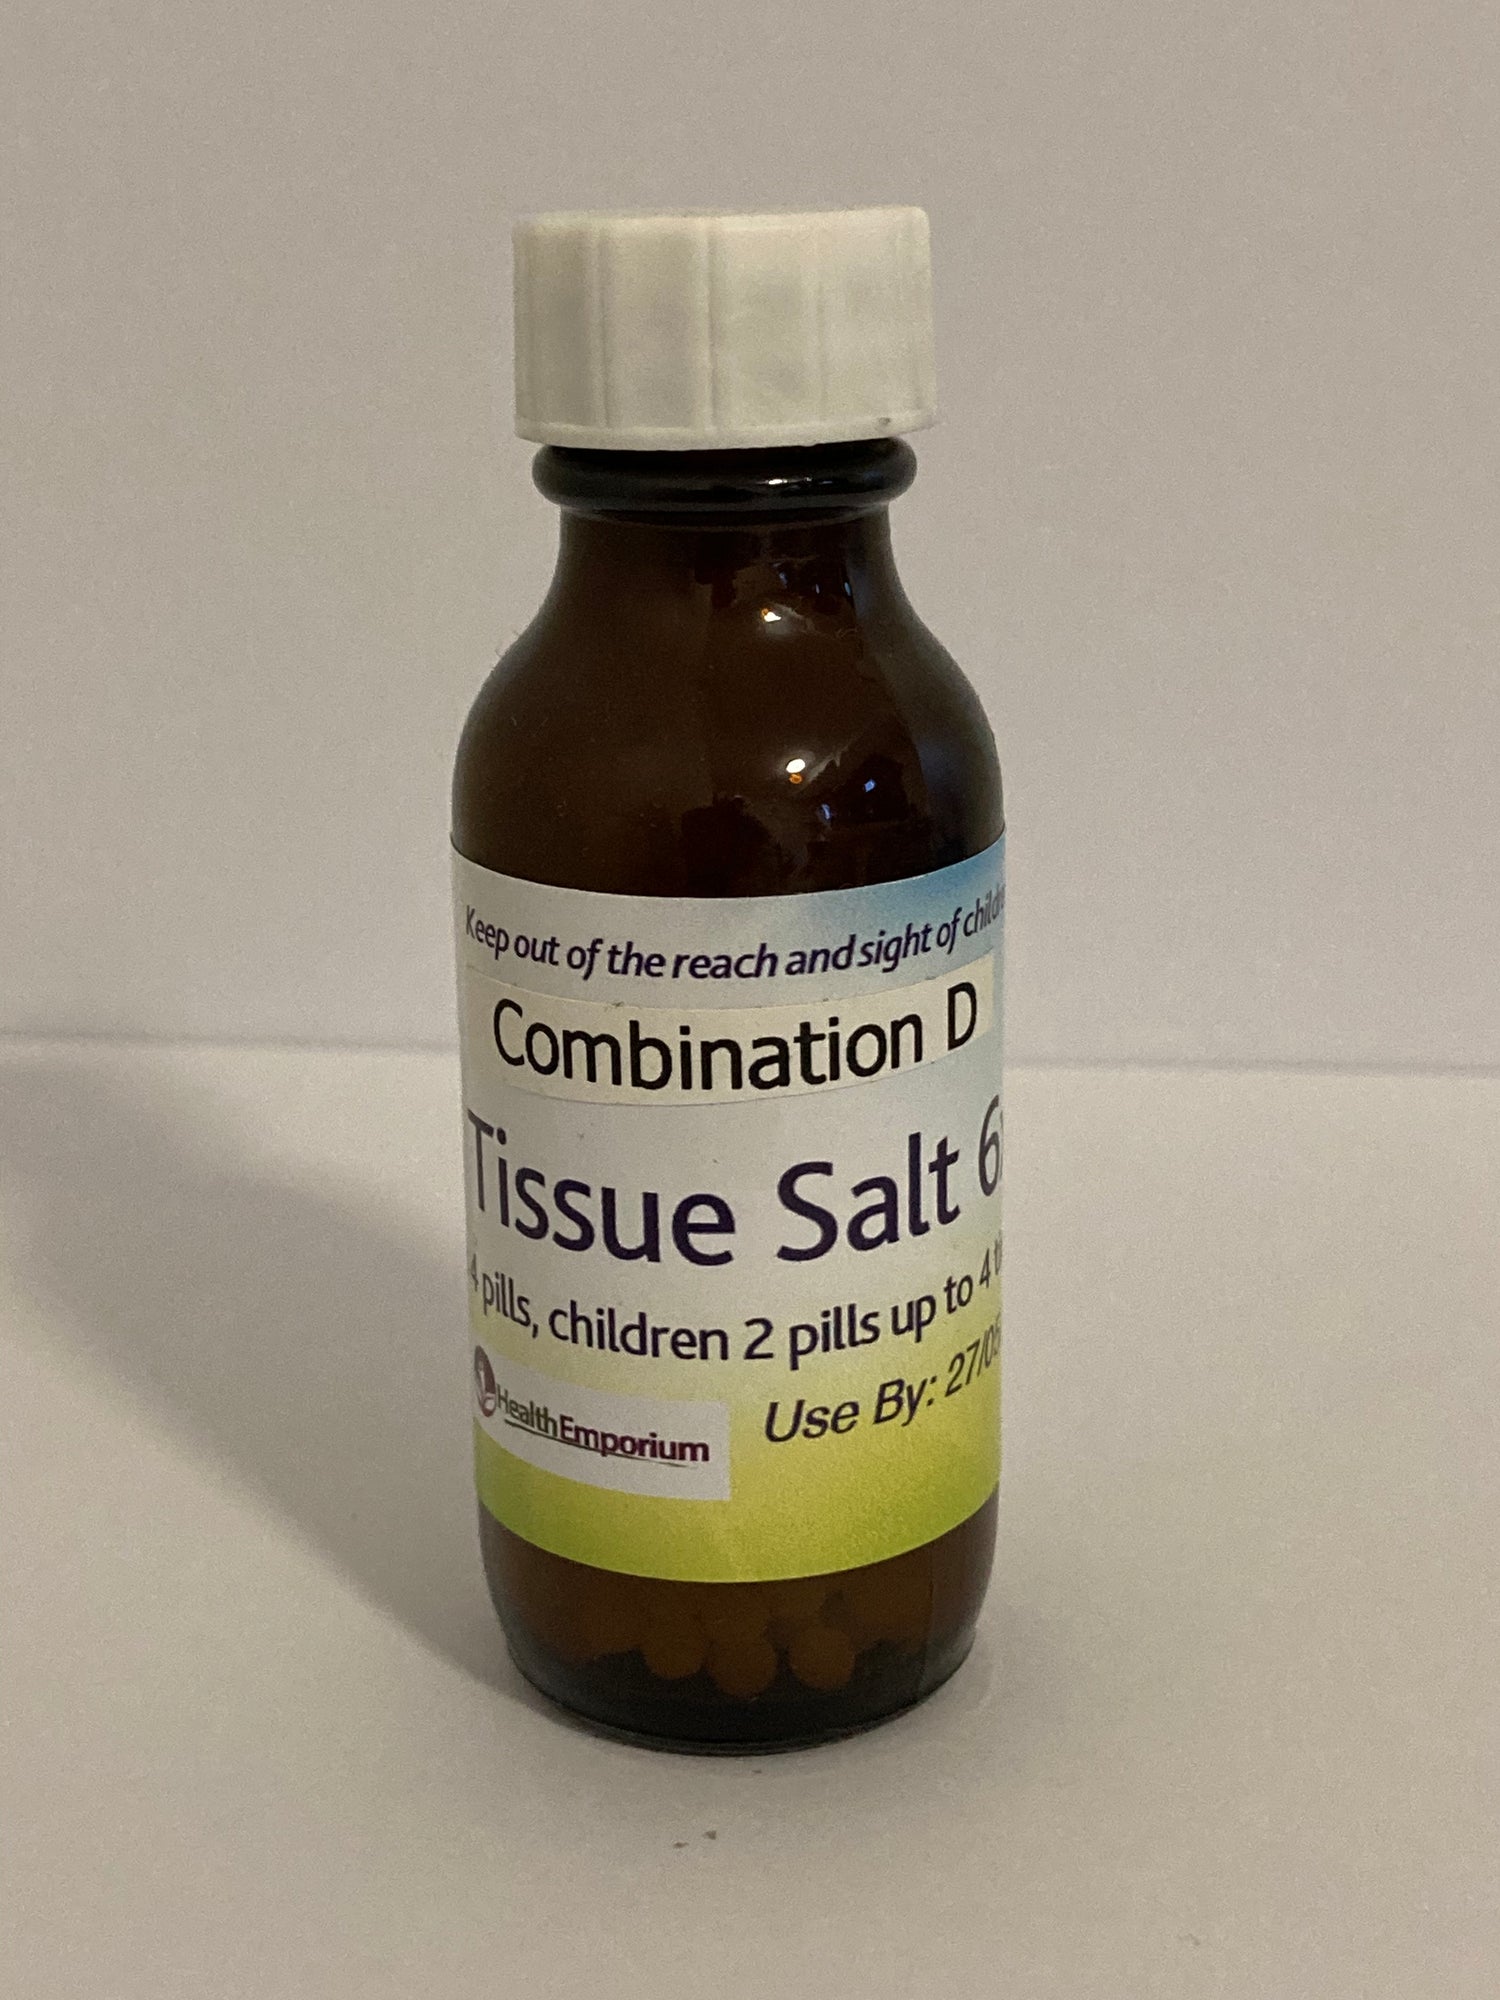 Combination D Tissue Salt Soft